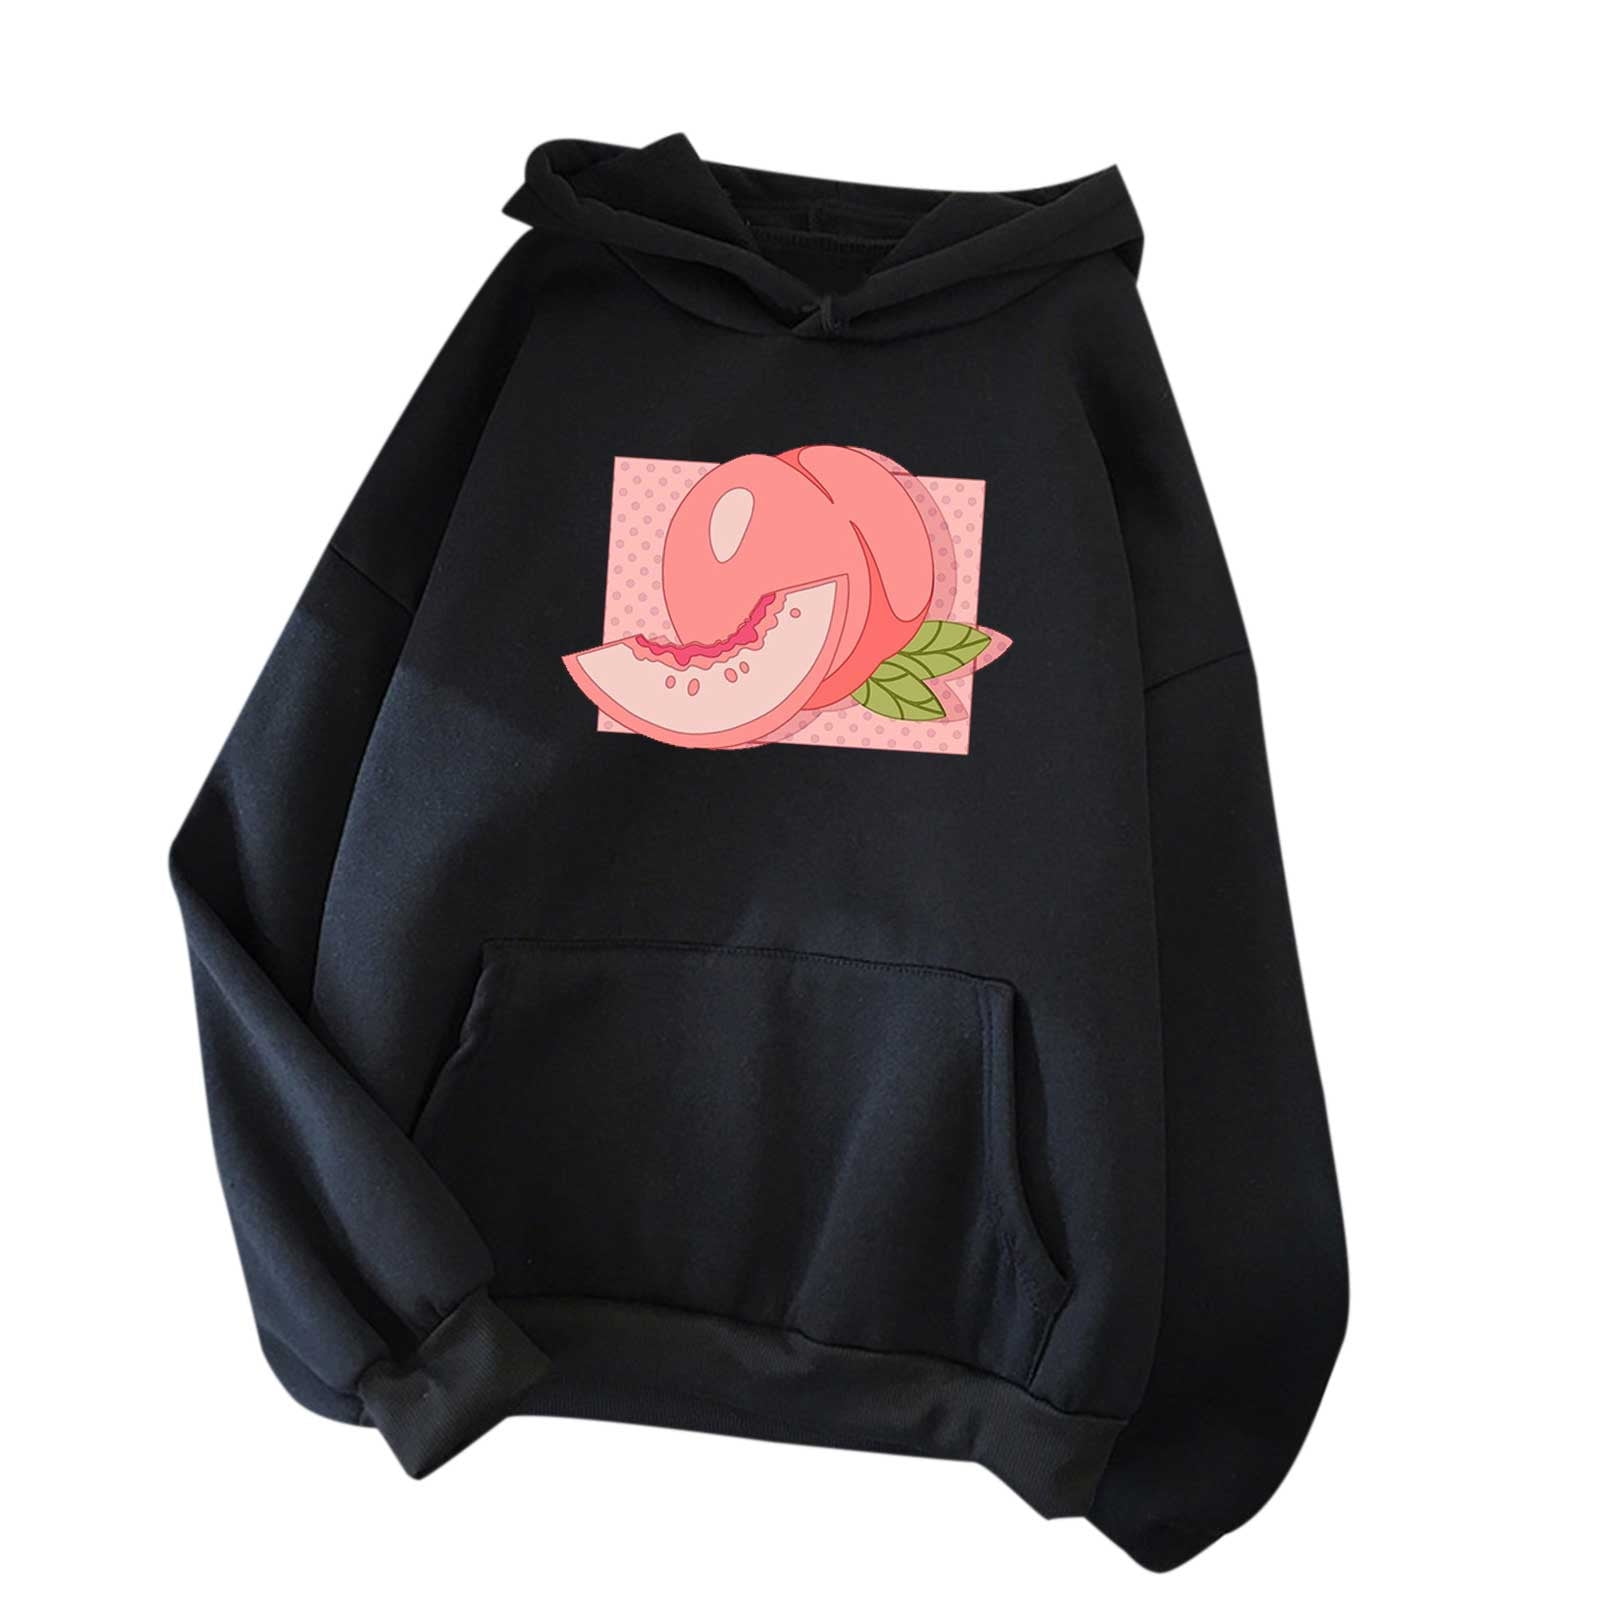 HAPIMO Savings Sweatshirt for Women Pocket Drawstring Pullover Tops ECG  Graphic Print Long Sleeve Relaxed Fit Womens Hoodie Sweatshirt Teen Girls  Clothes Pink M 